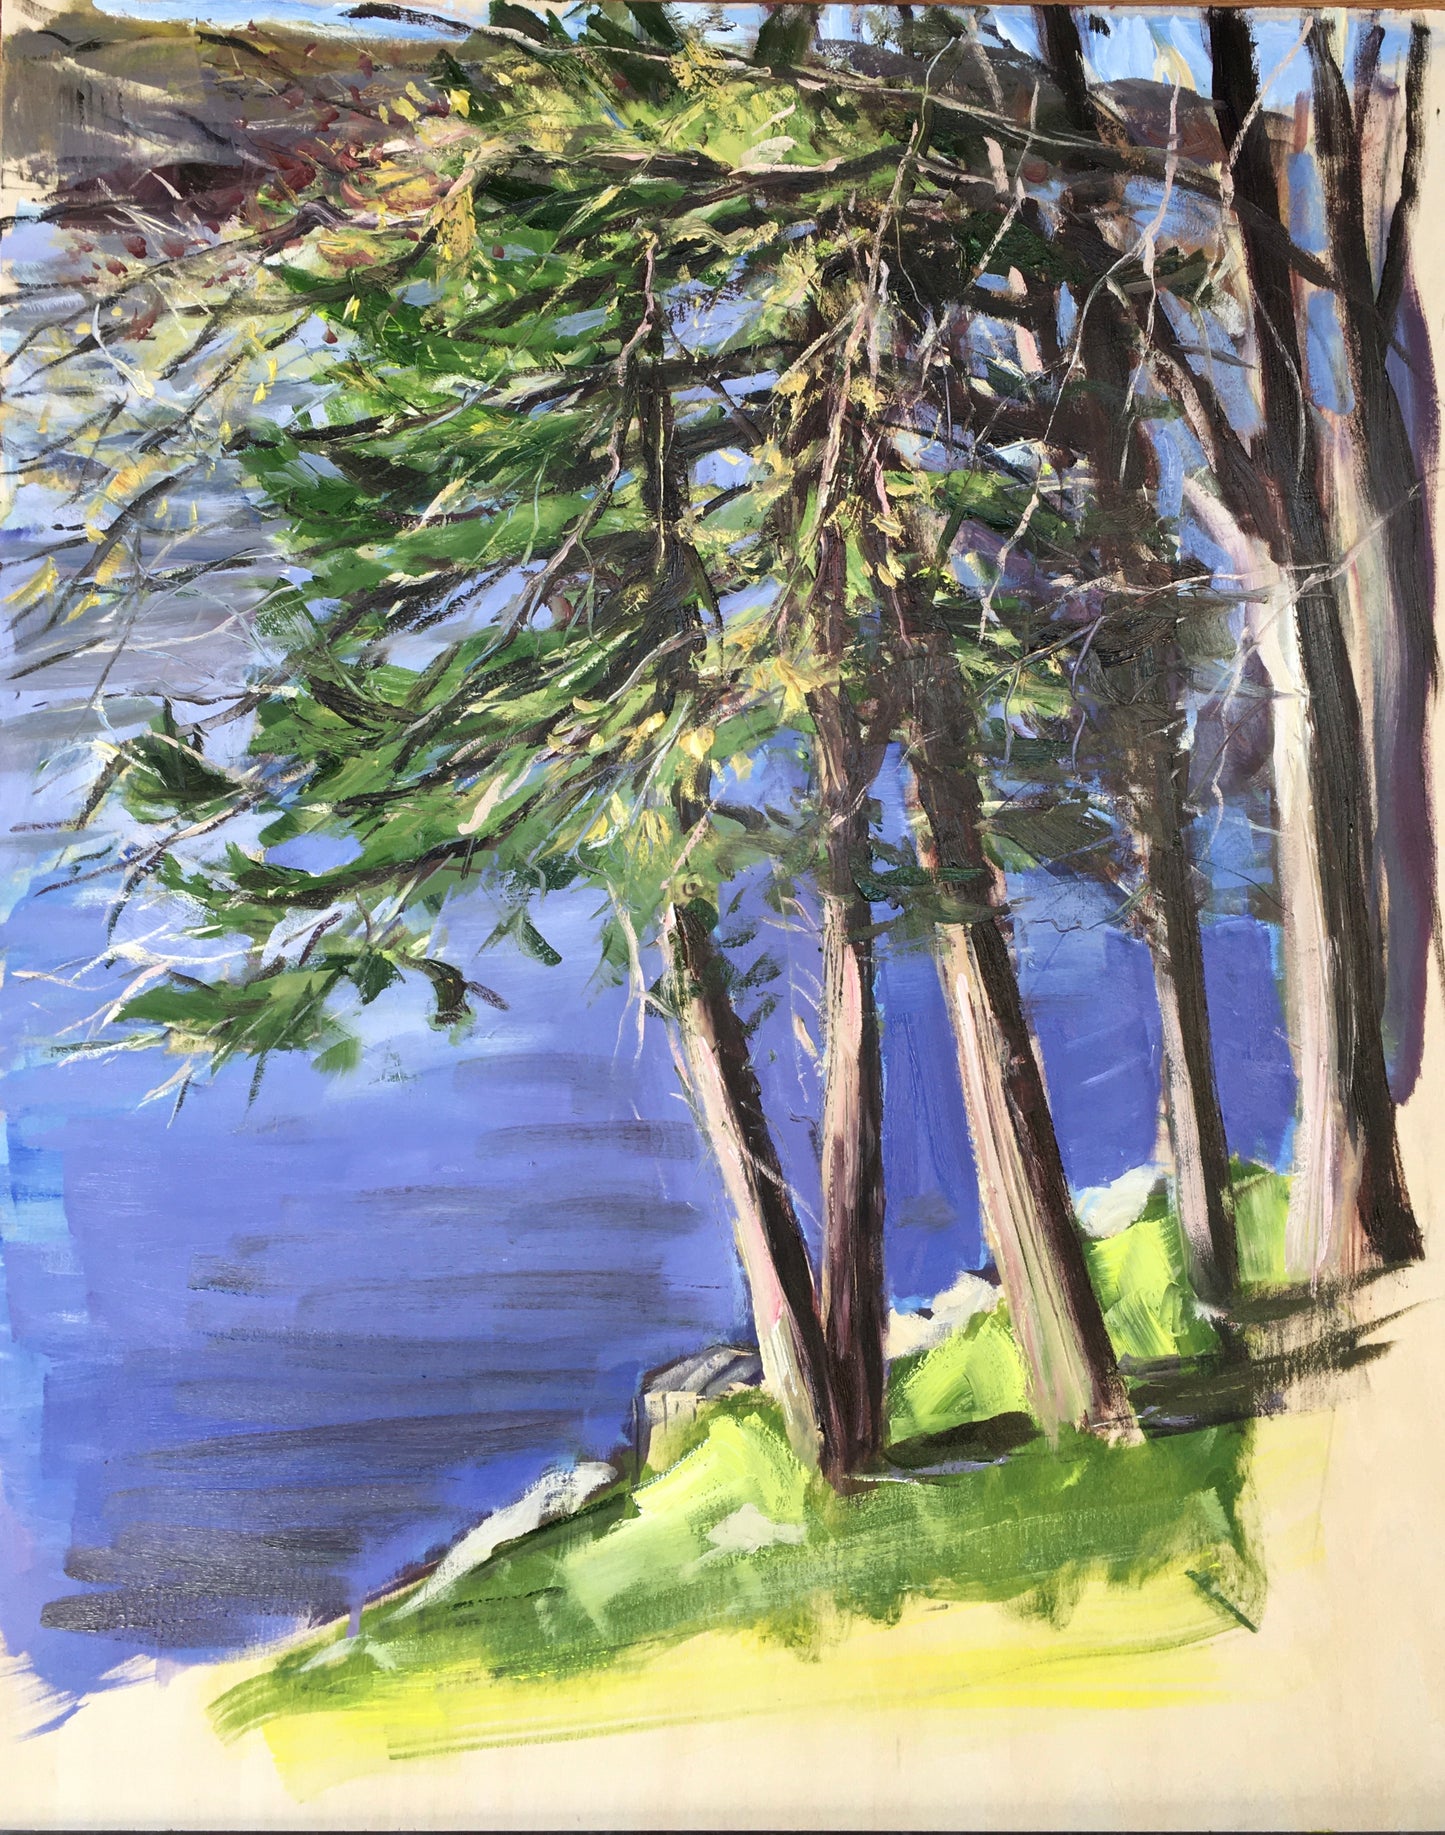 Upton Lake through the Trees, 8:30 am, May 5th, 2020